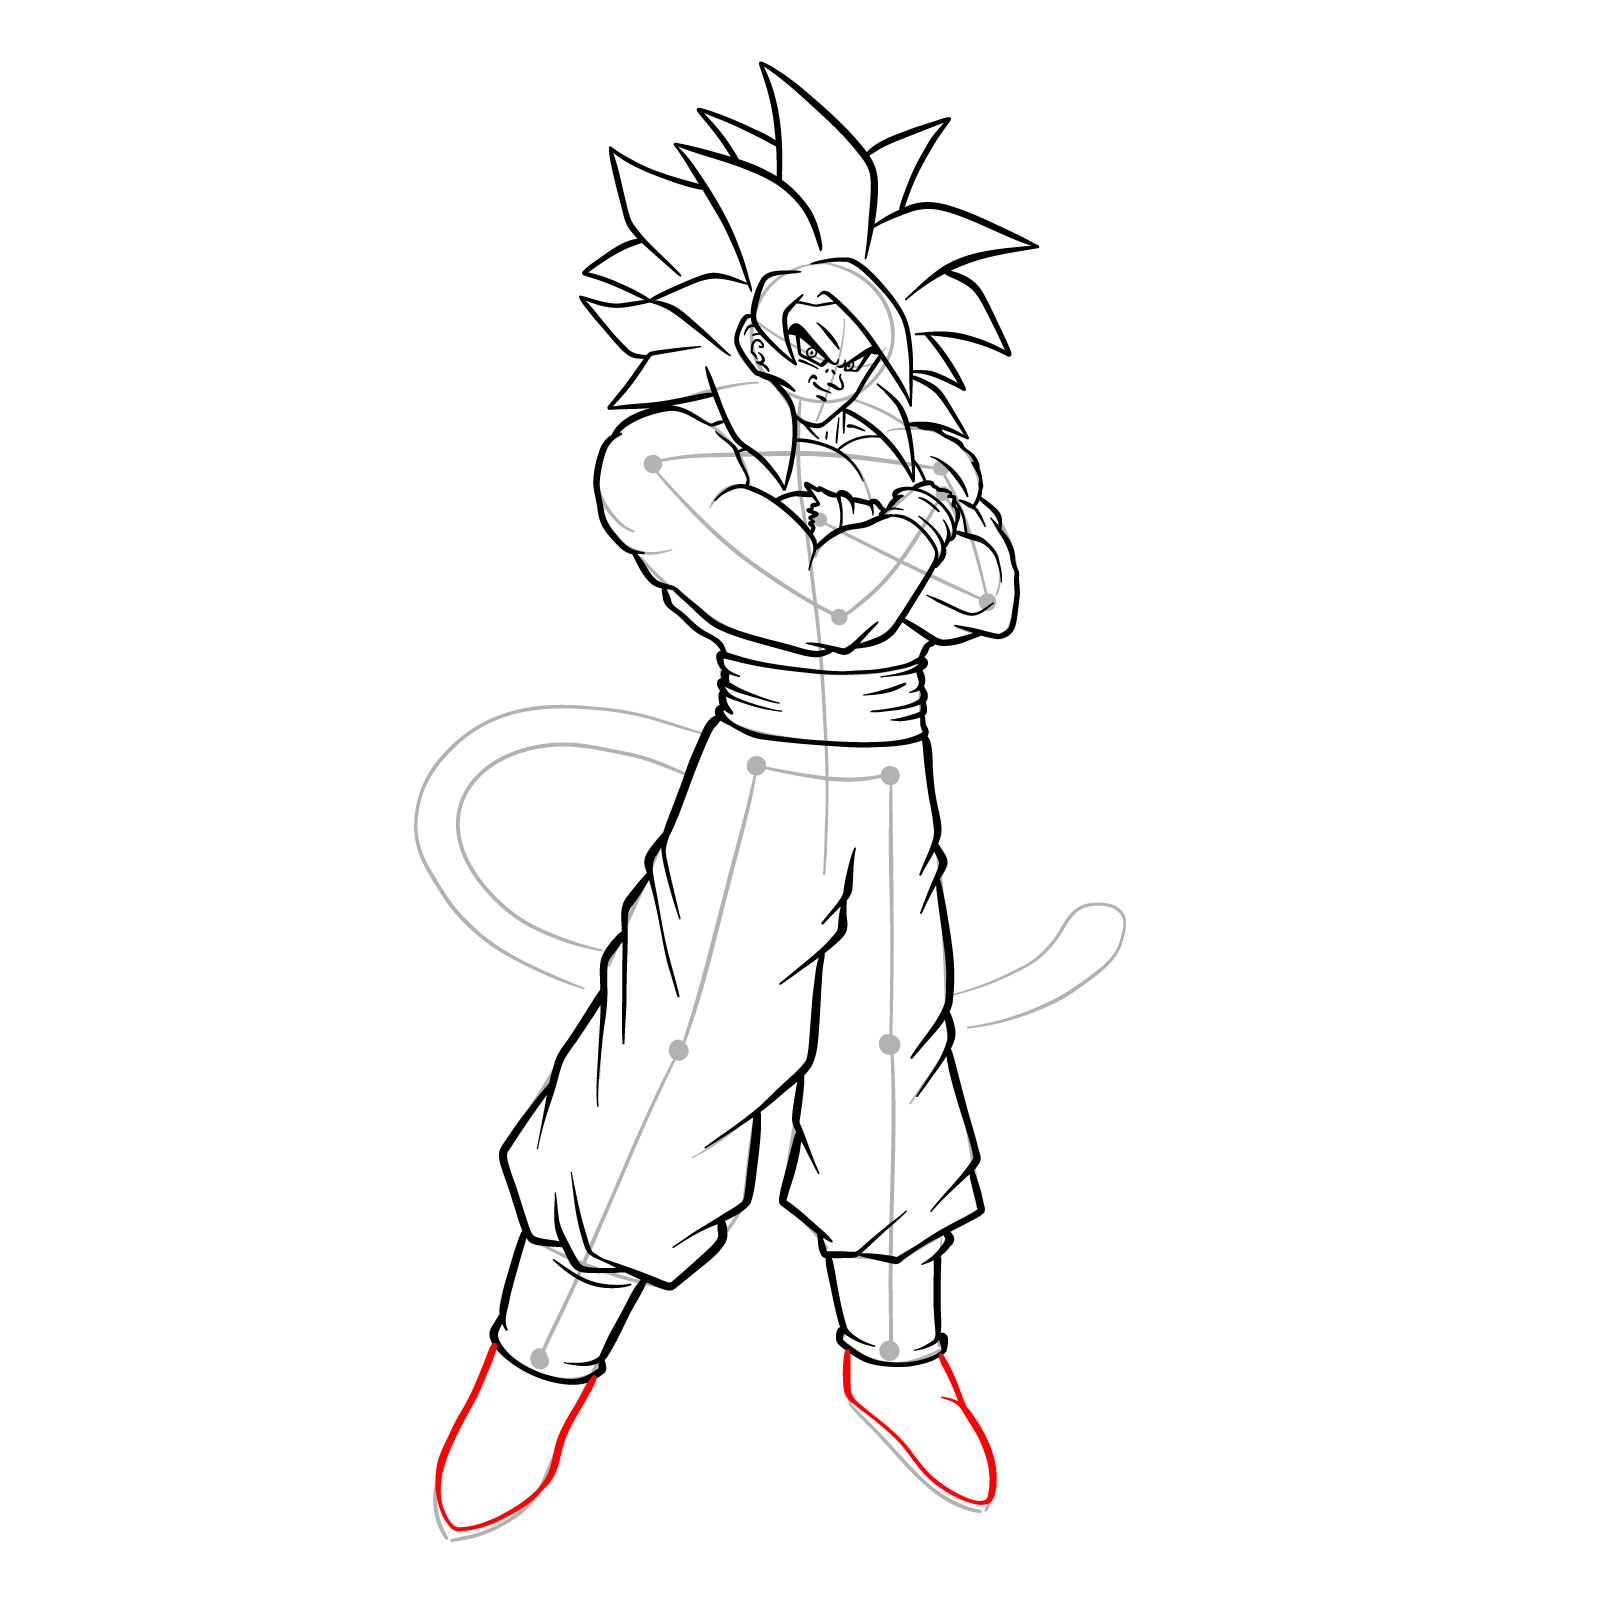 How to tát draw Goku Super Saiyan 4 - step 29